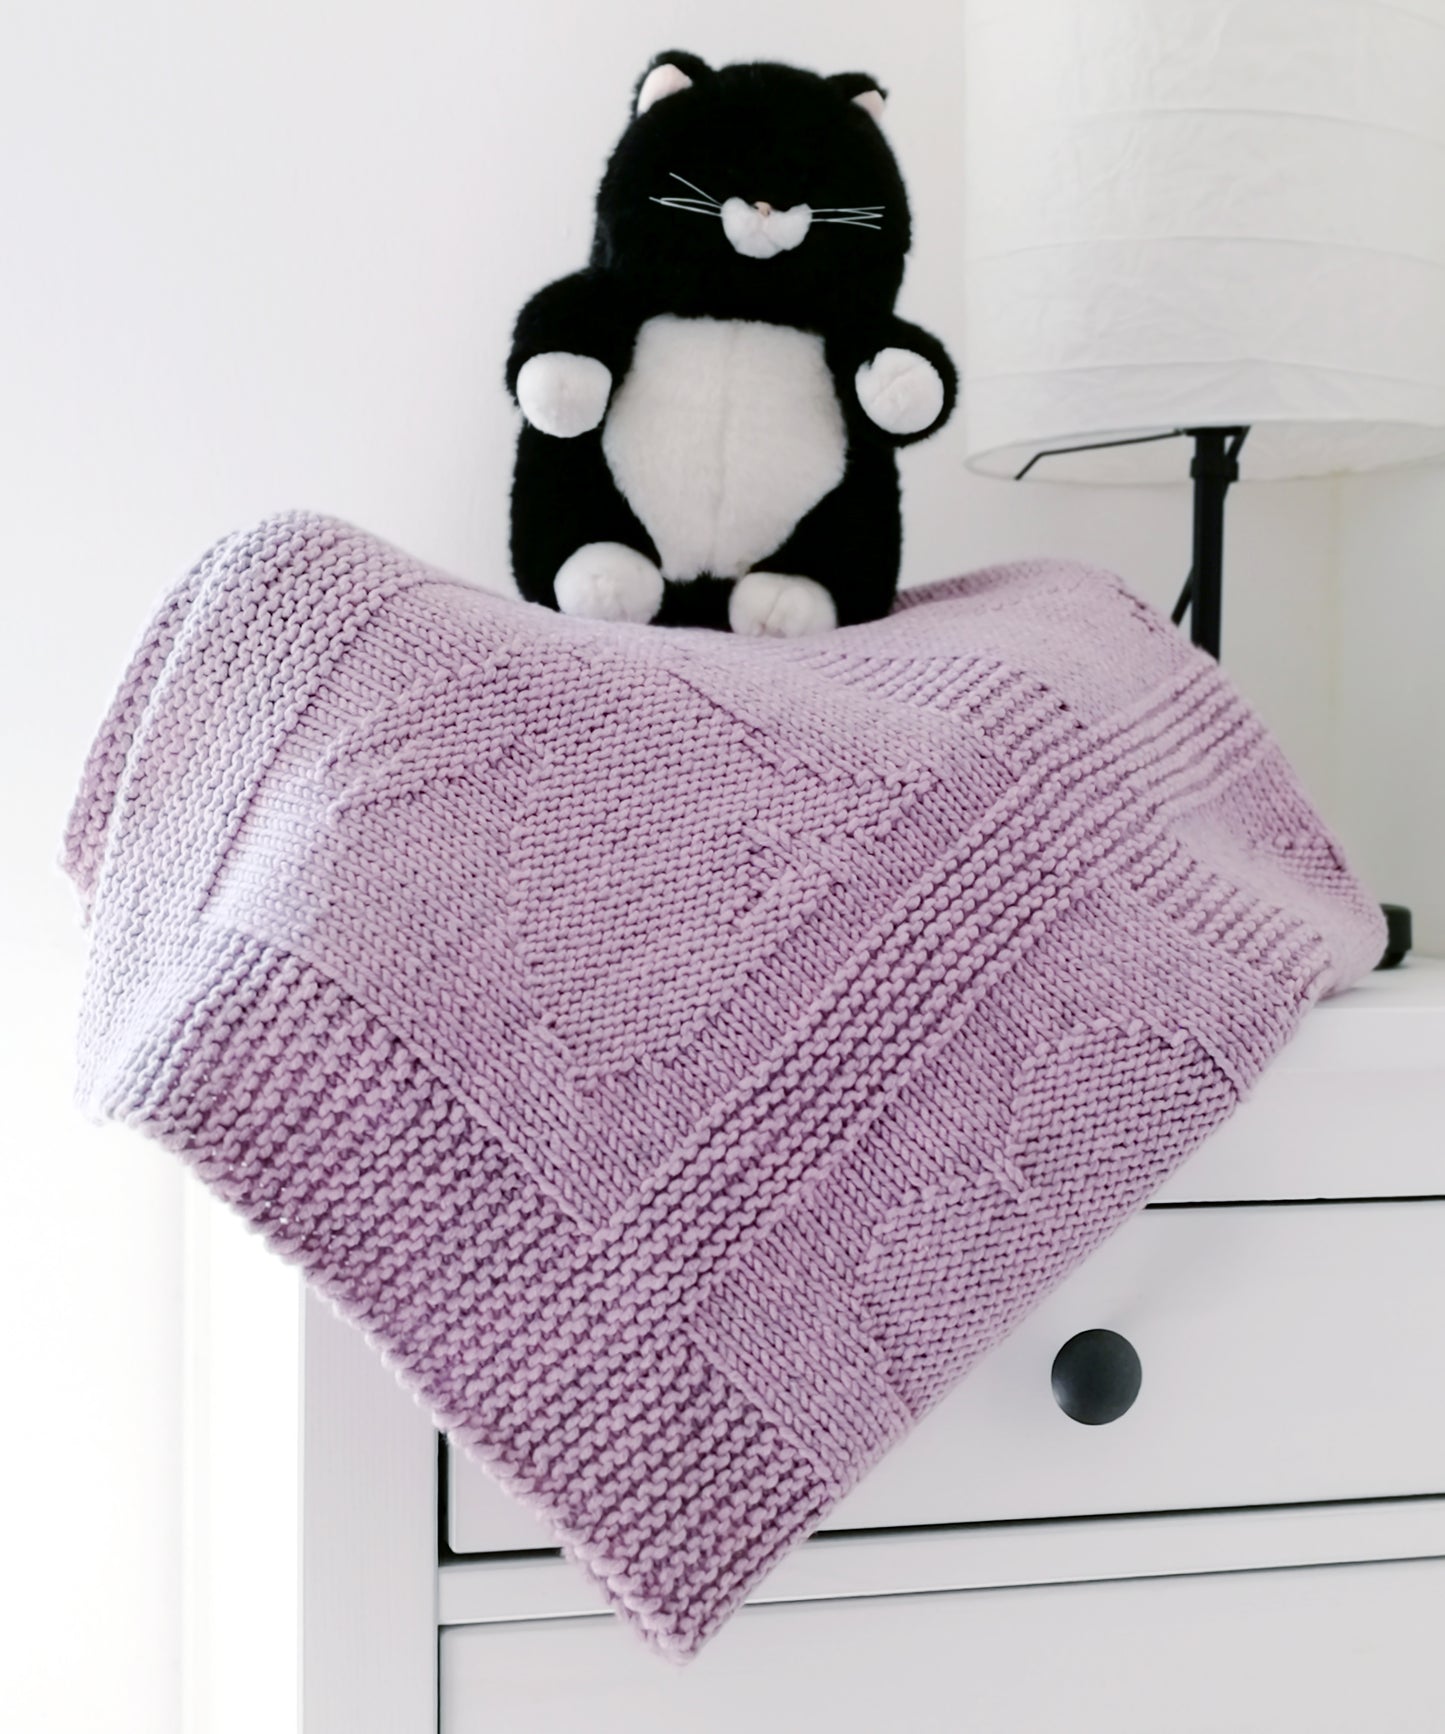 Purple superwash merino wool yarn hand-knitted baby blanket in Hearts & Bunnies knitting pattern